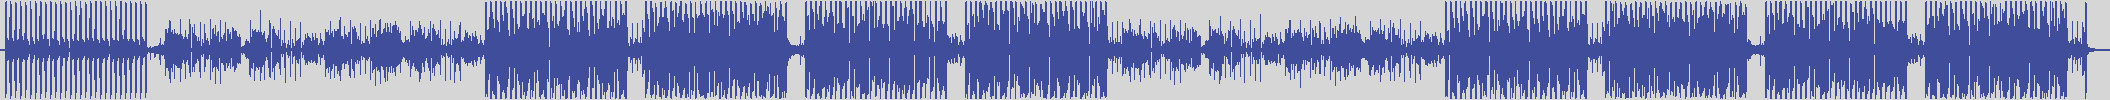 nf_boyz_records [NFY033] Paul Wellsh - What You Talking About [Stiliardik Mix] audio wave form